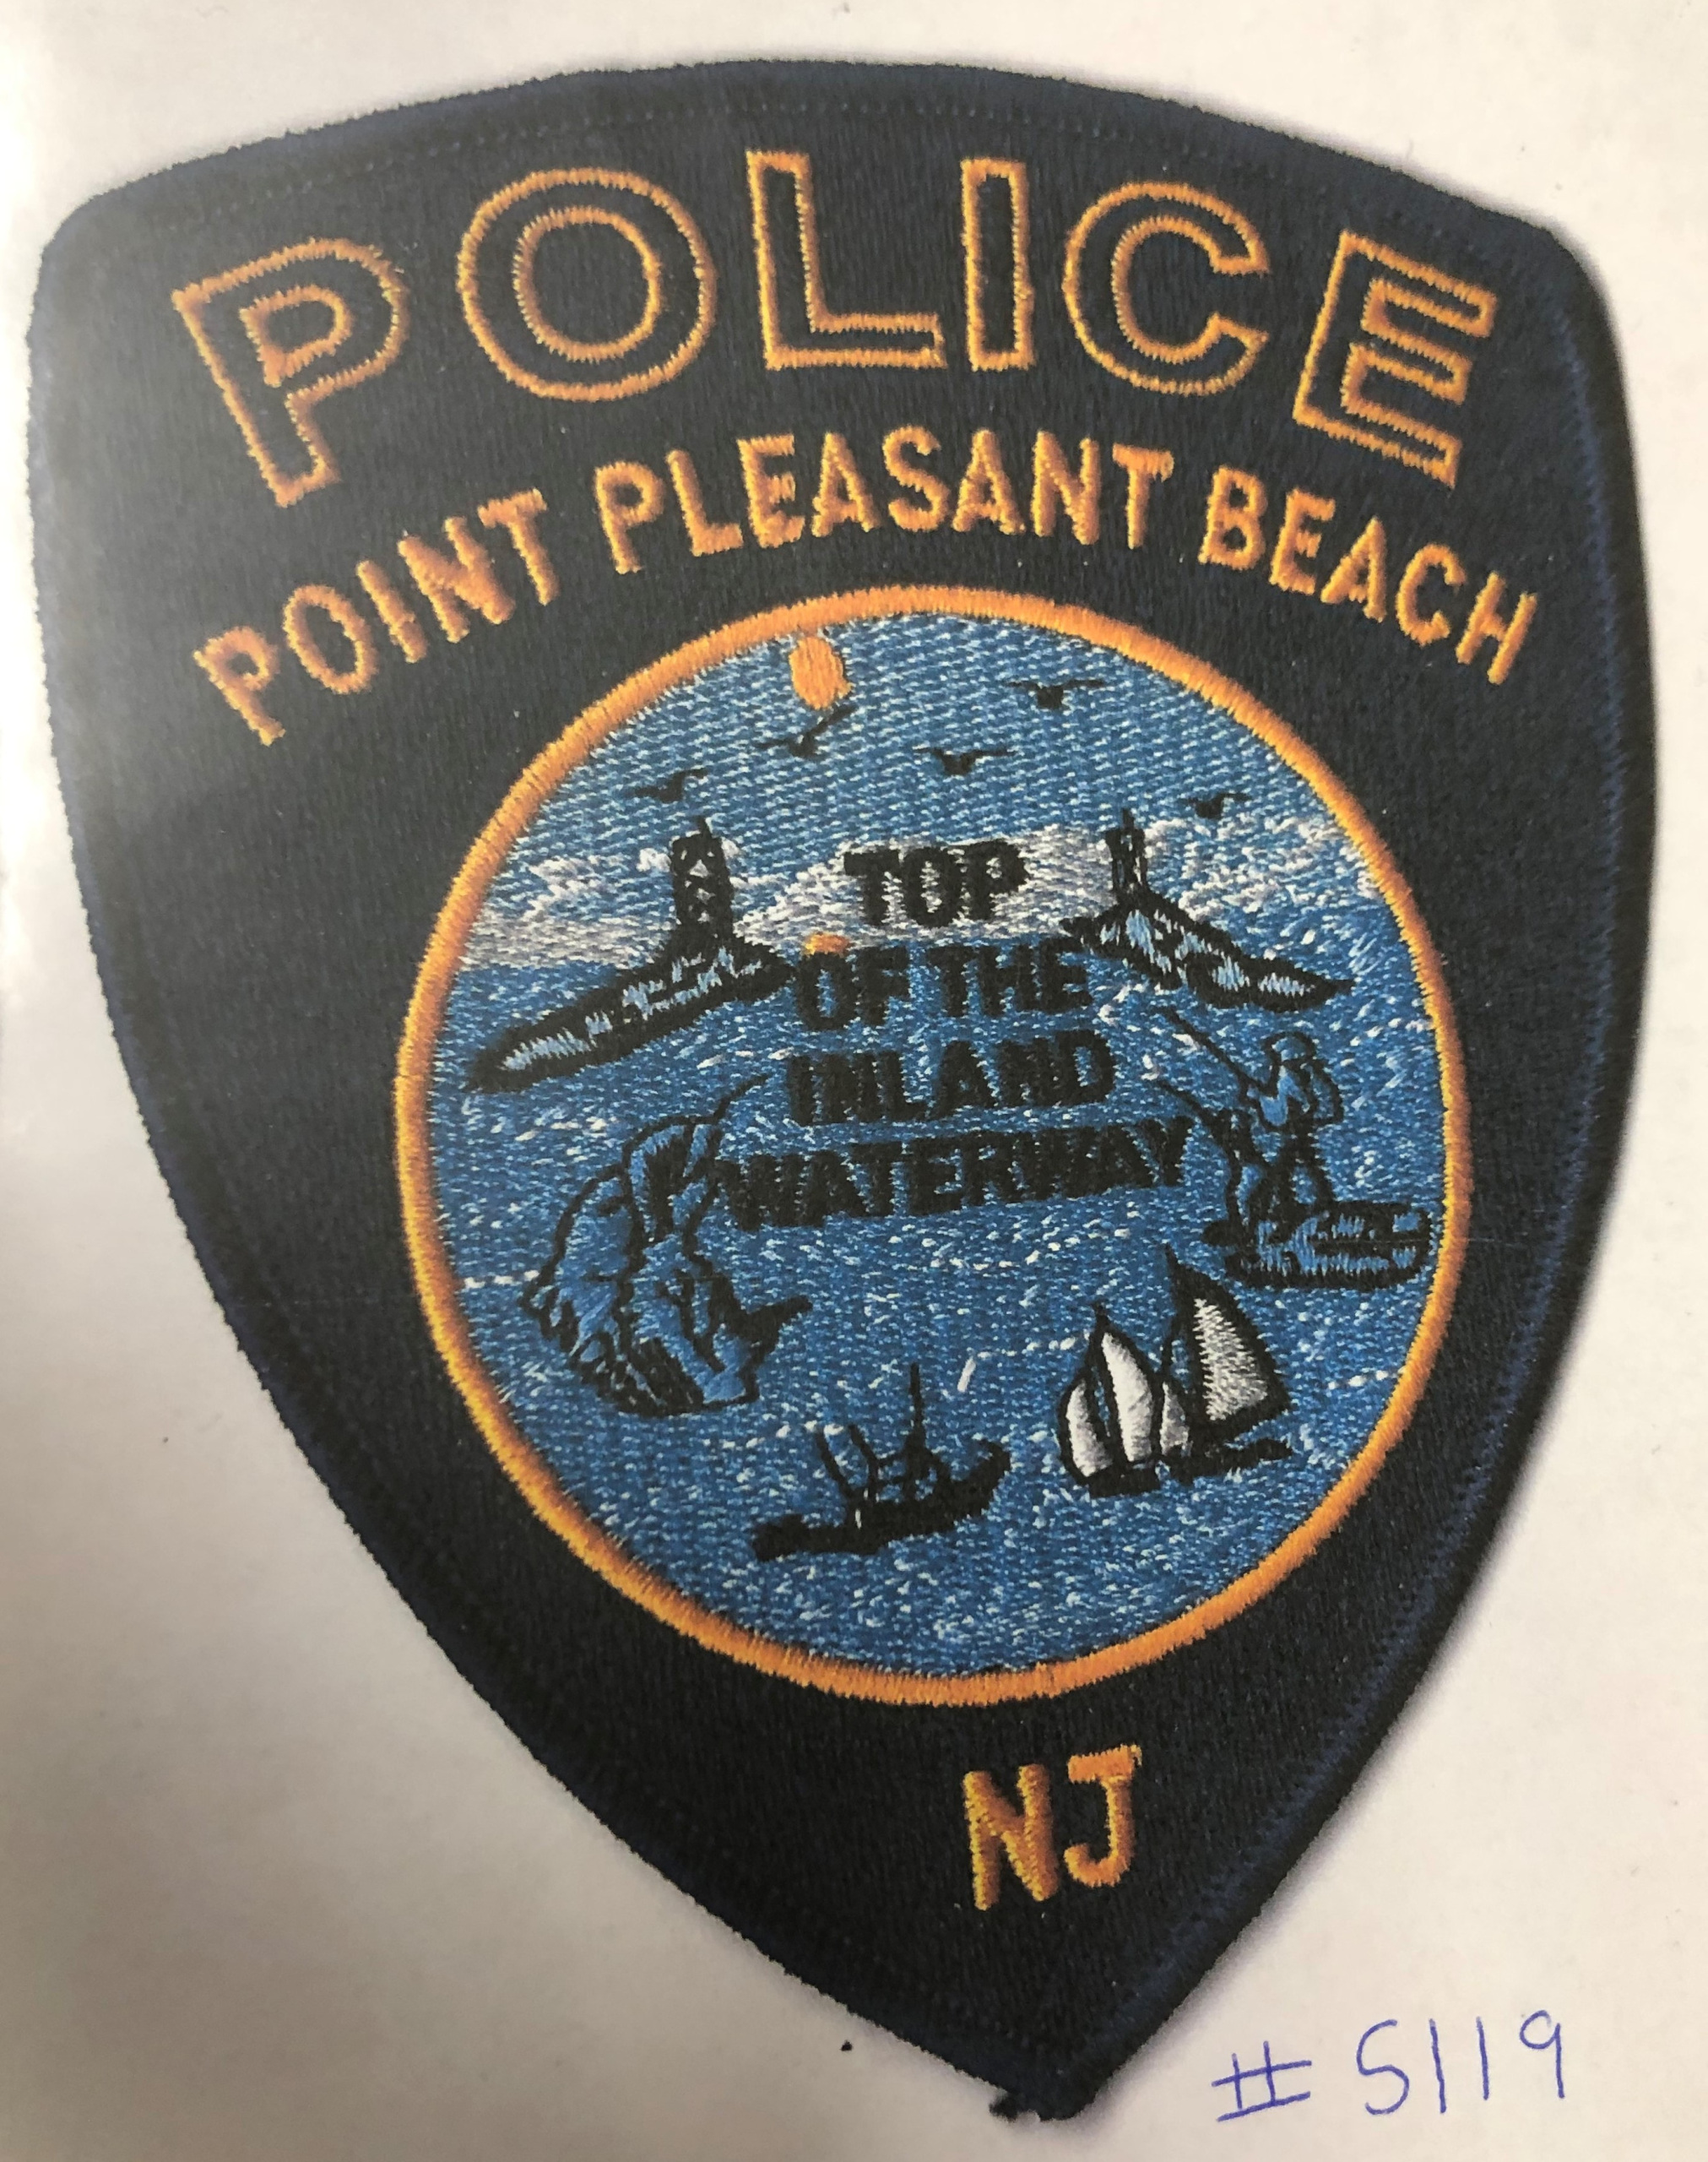 POINT PLEASANT BEACH POLICE DEPARTMENT SLEEVE 5119